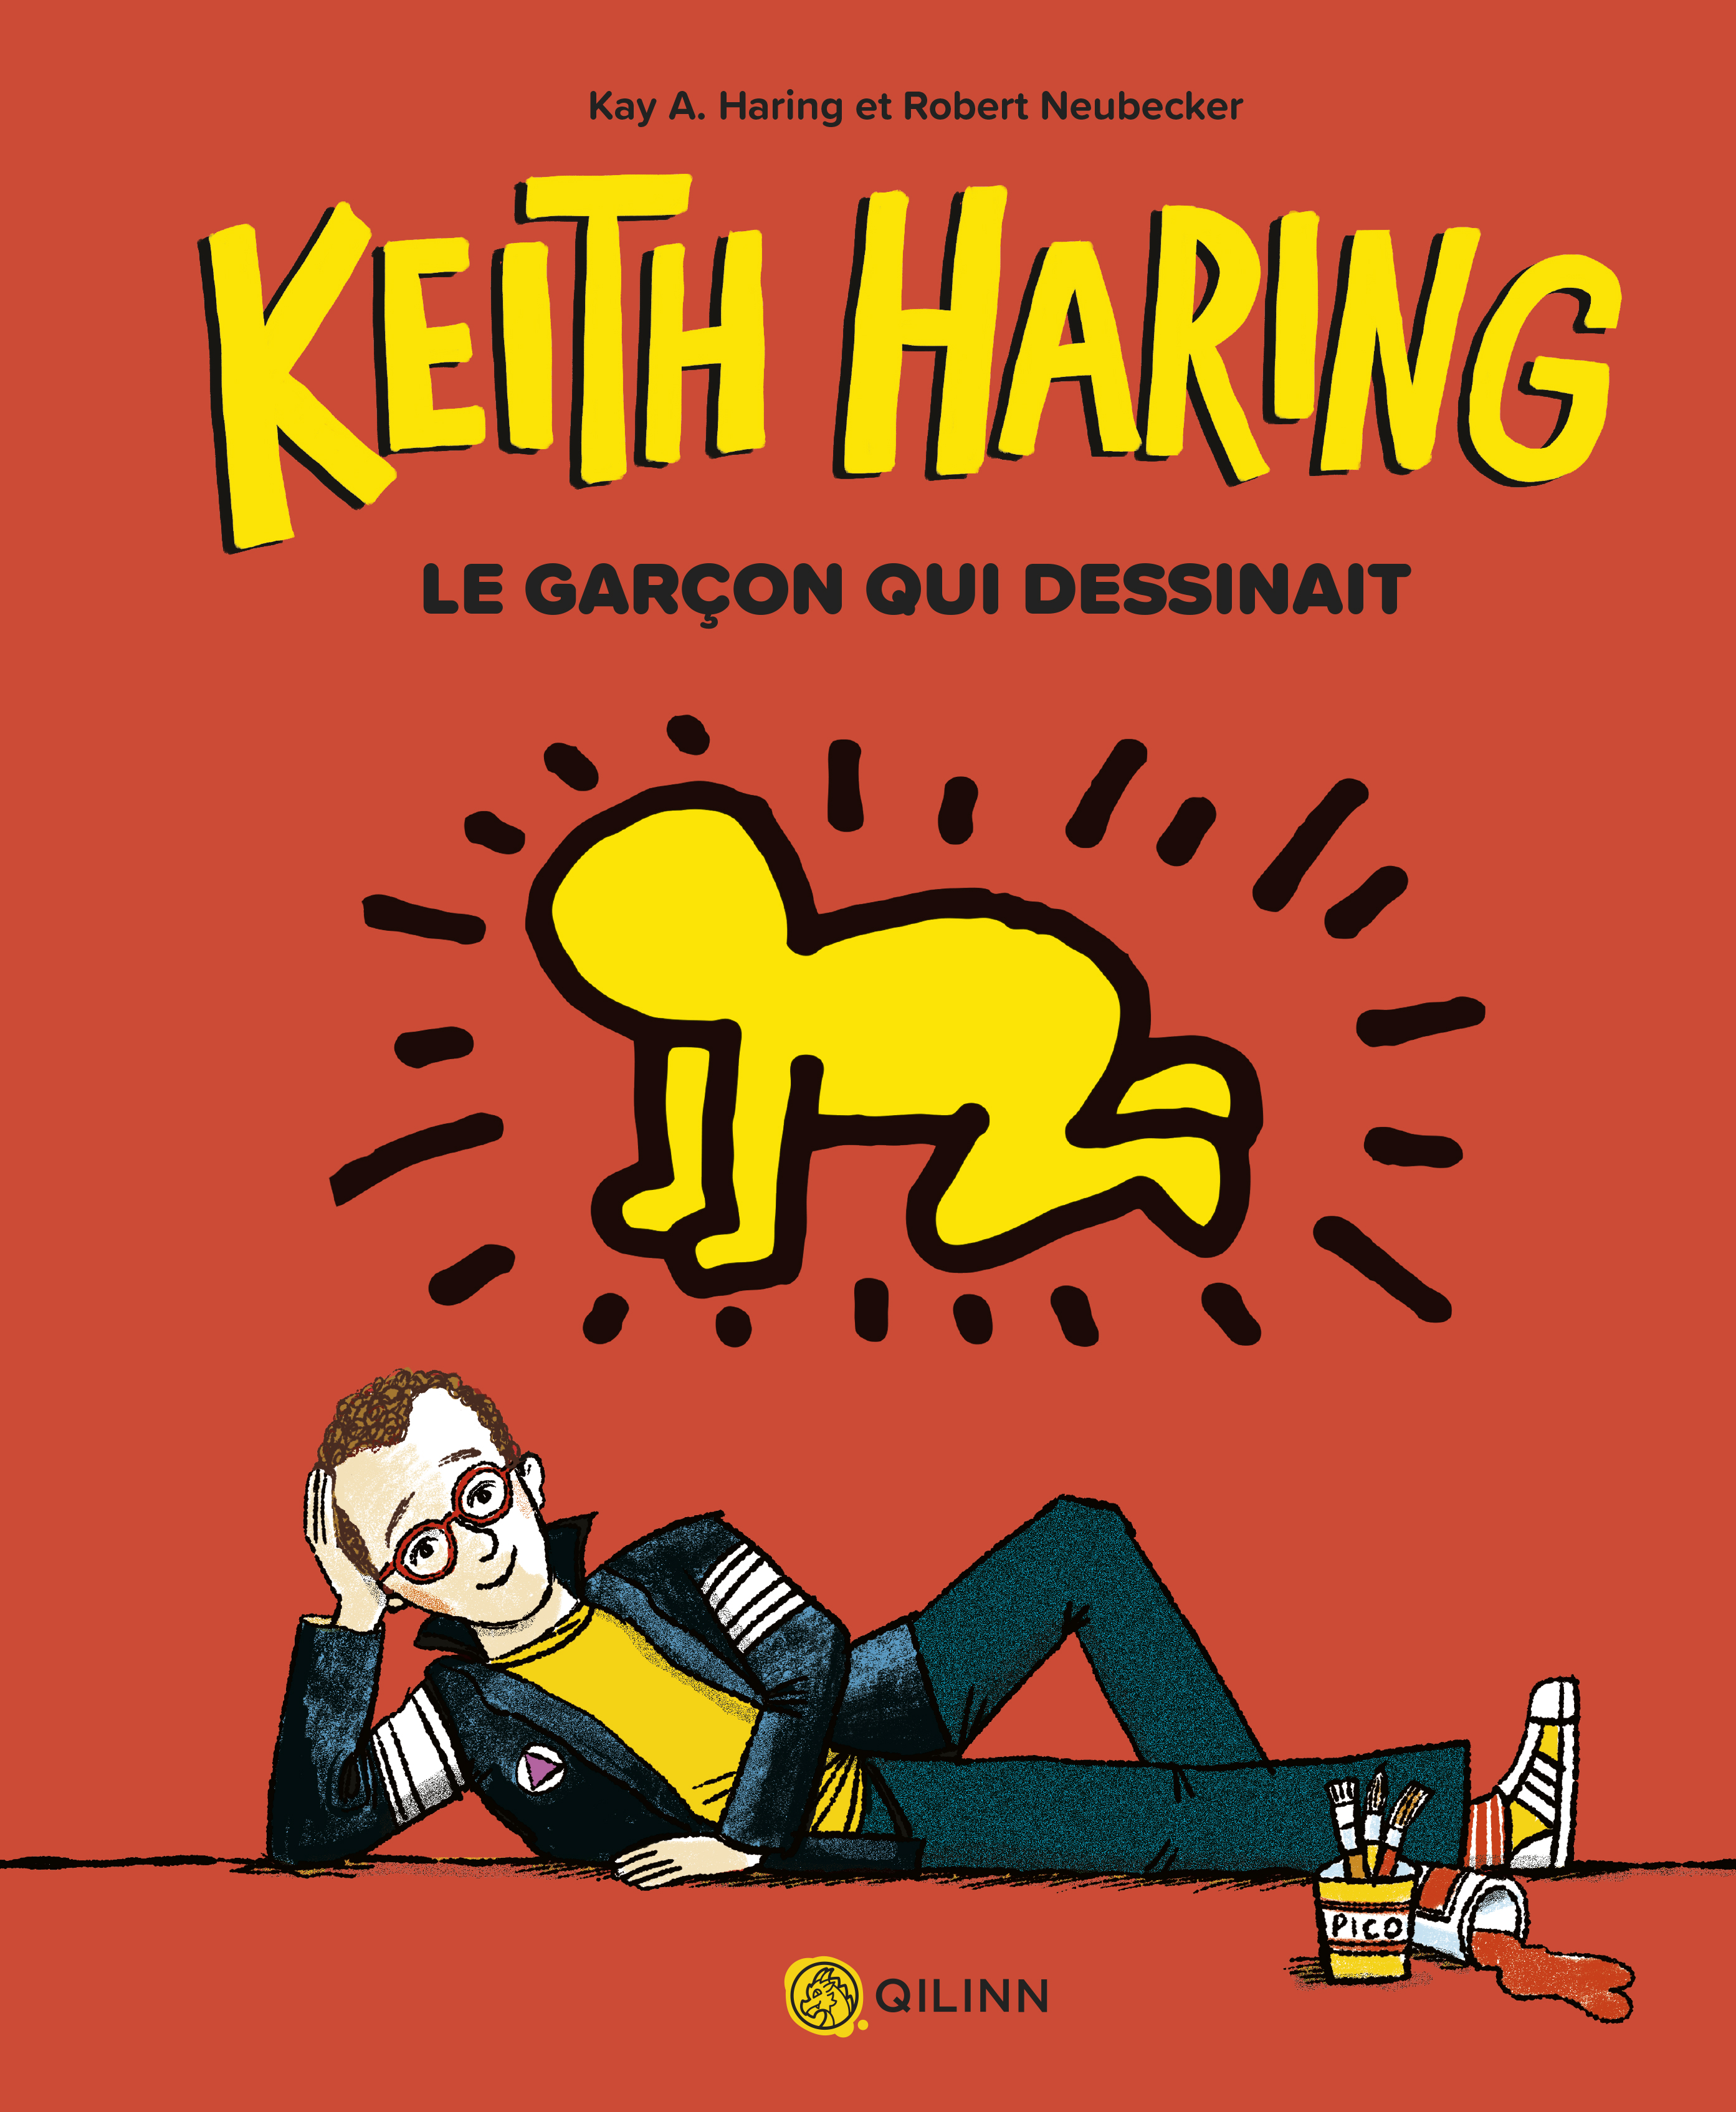 Les albums QILINN – Tome 5 – Keith Haring, le garçon qui dessinait - couv